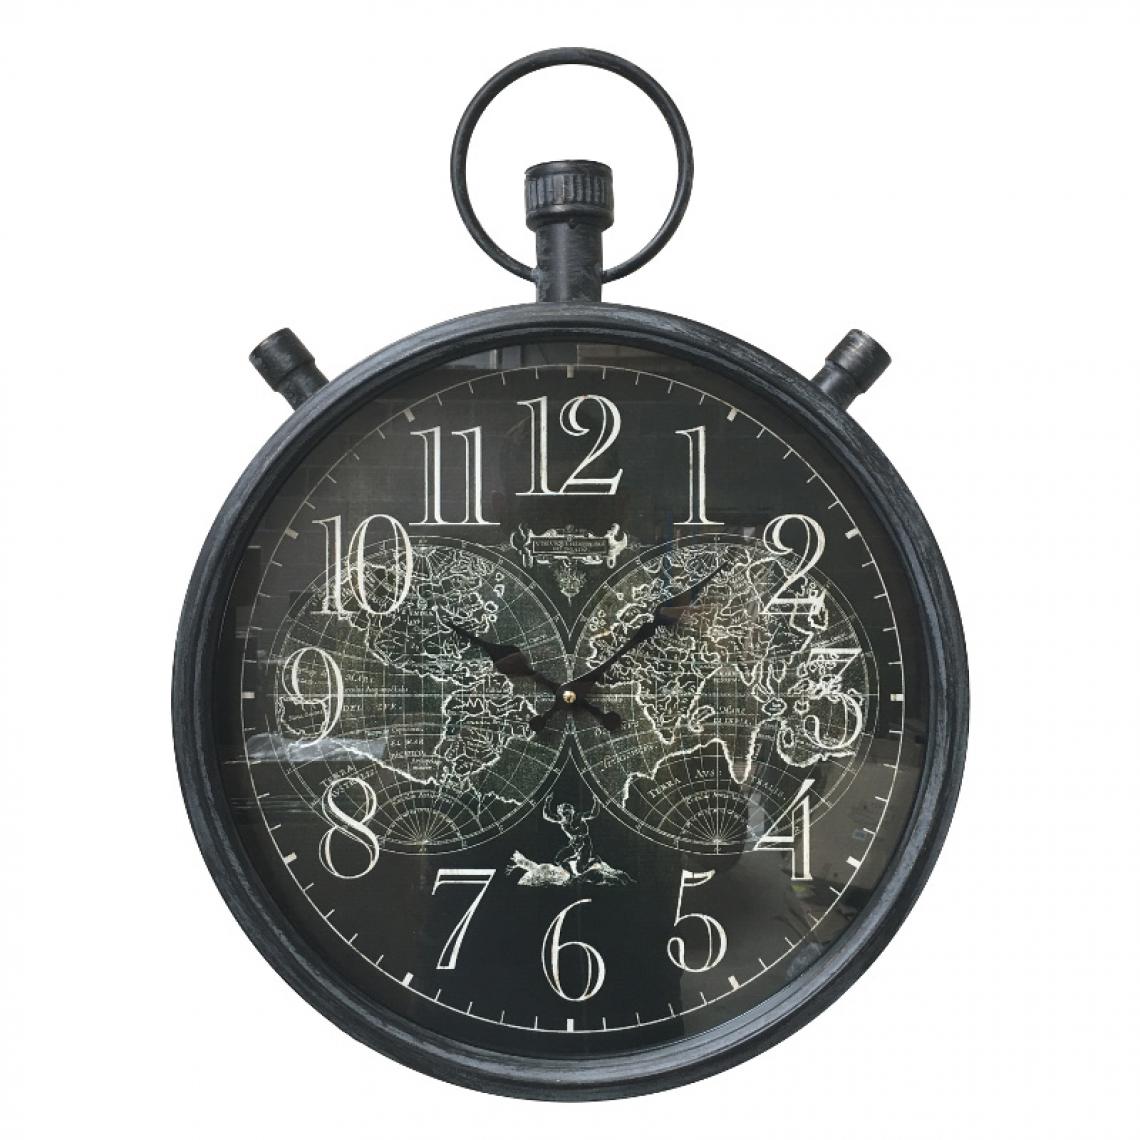 L'Originale Deco - Horloge de Gare Horloge Industrielle Murale Gousset Fer Verre 60 cm x 44 cm - Horloges, pendules